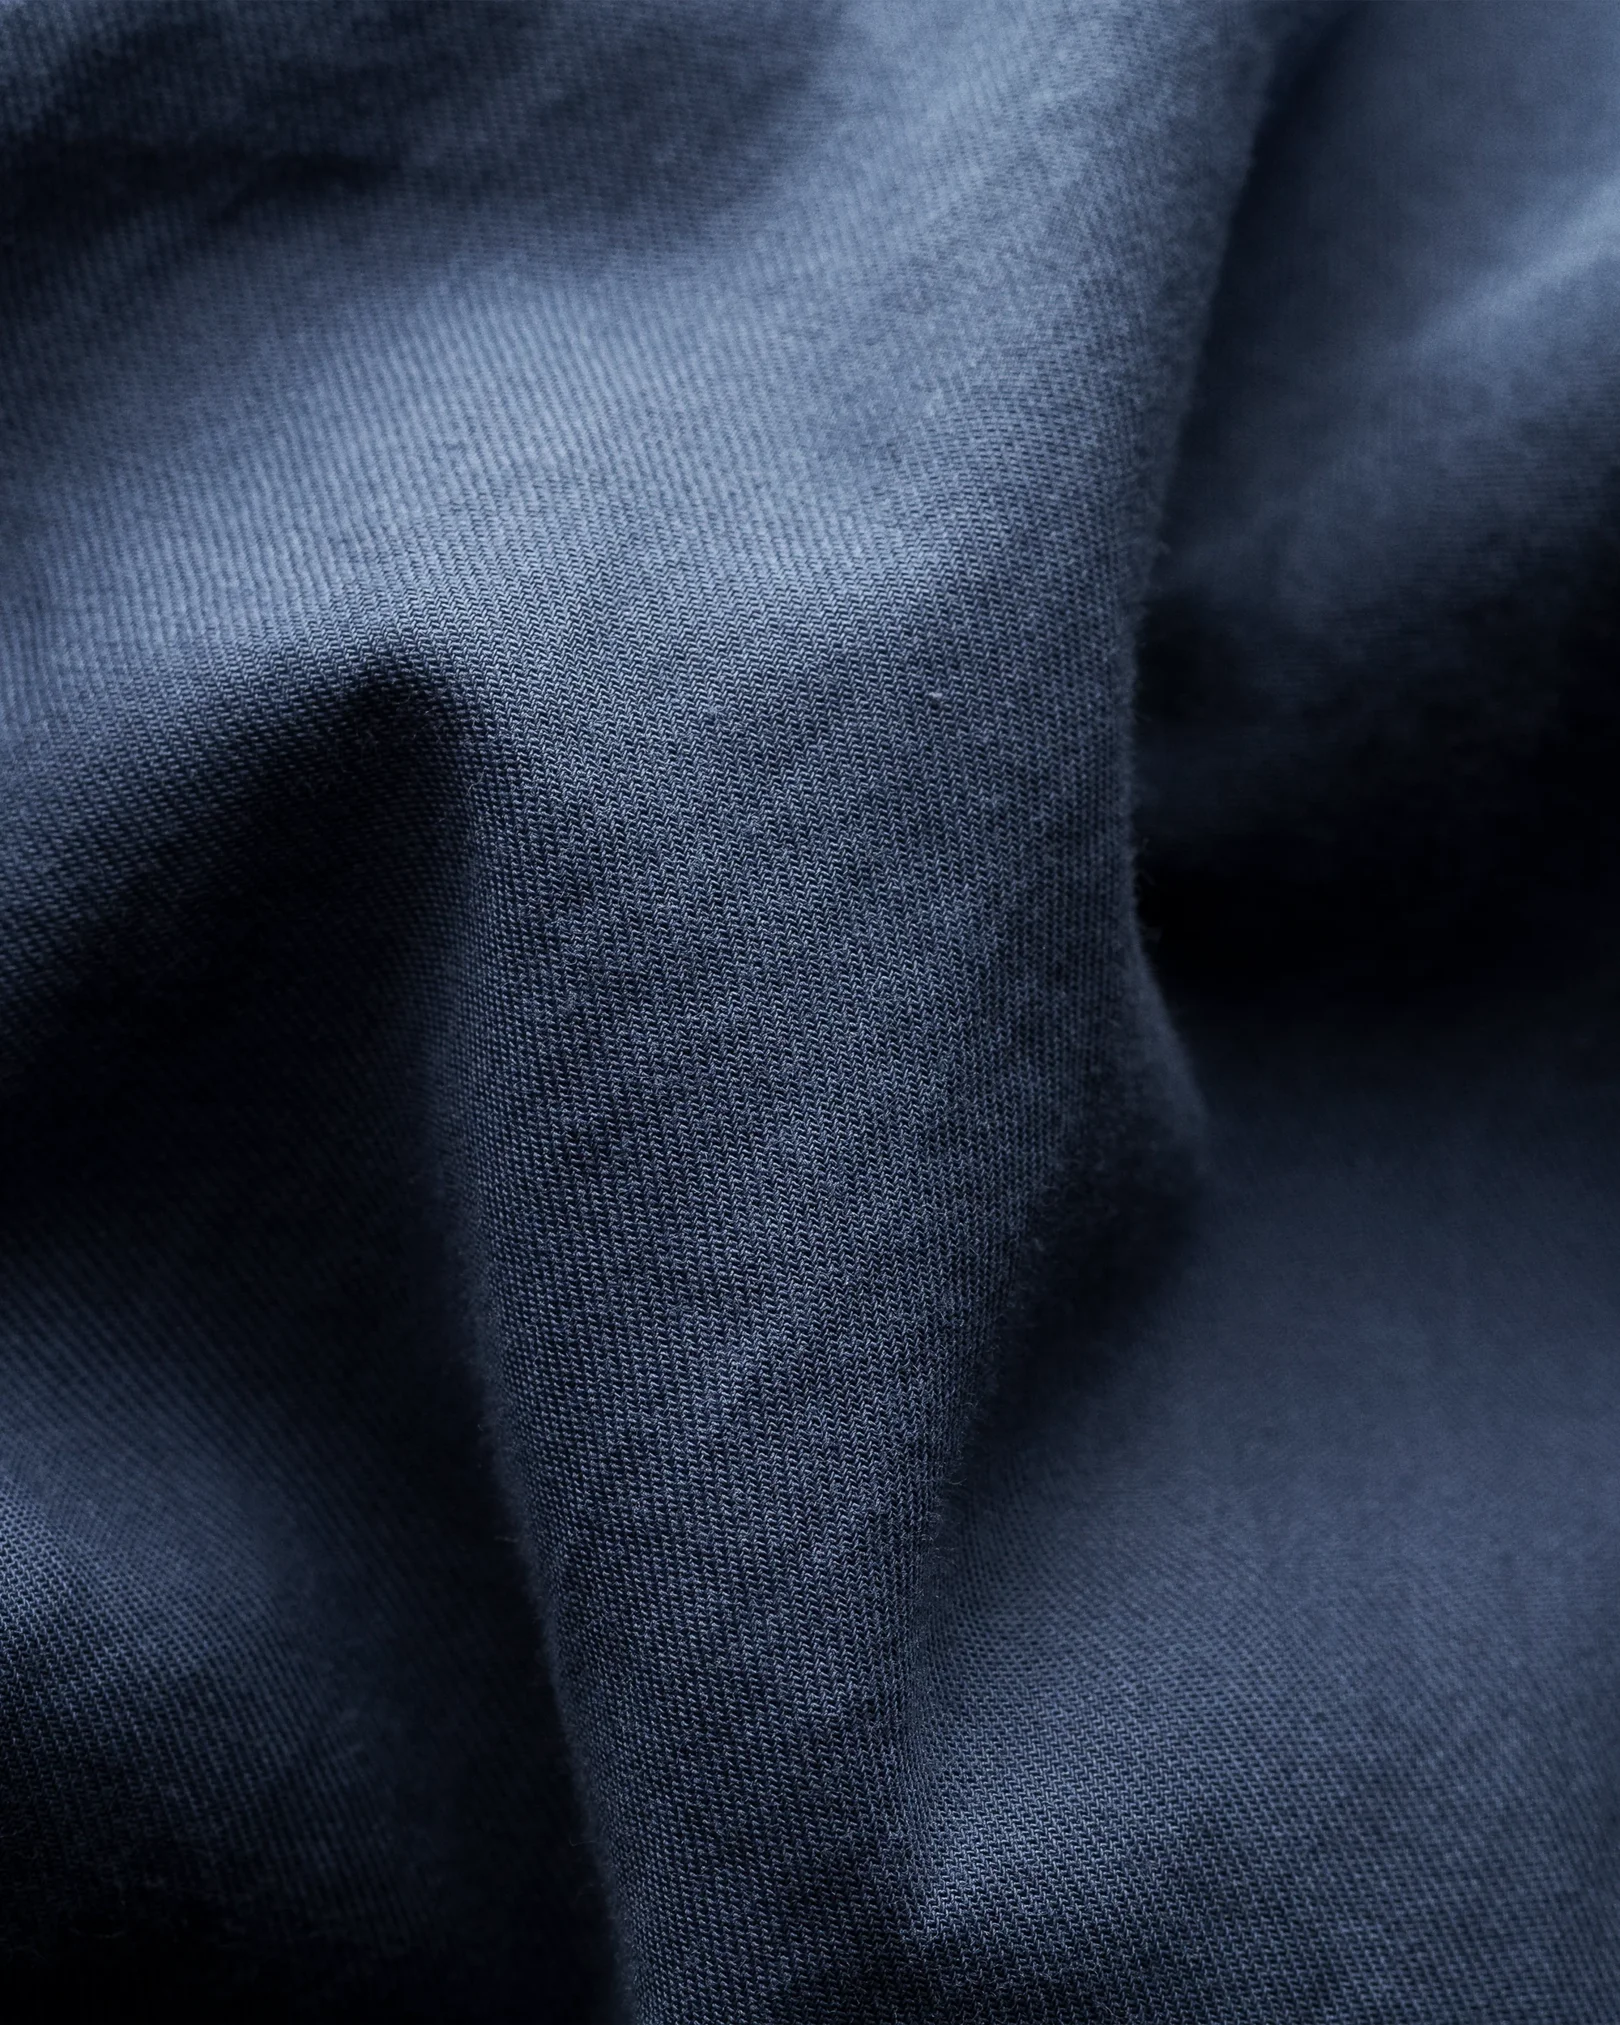 Eton - dusty blue lightweight flannel shirt